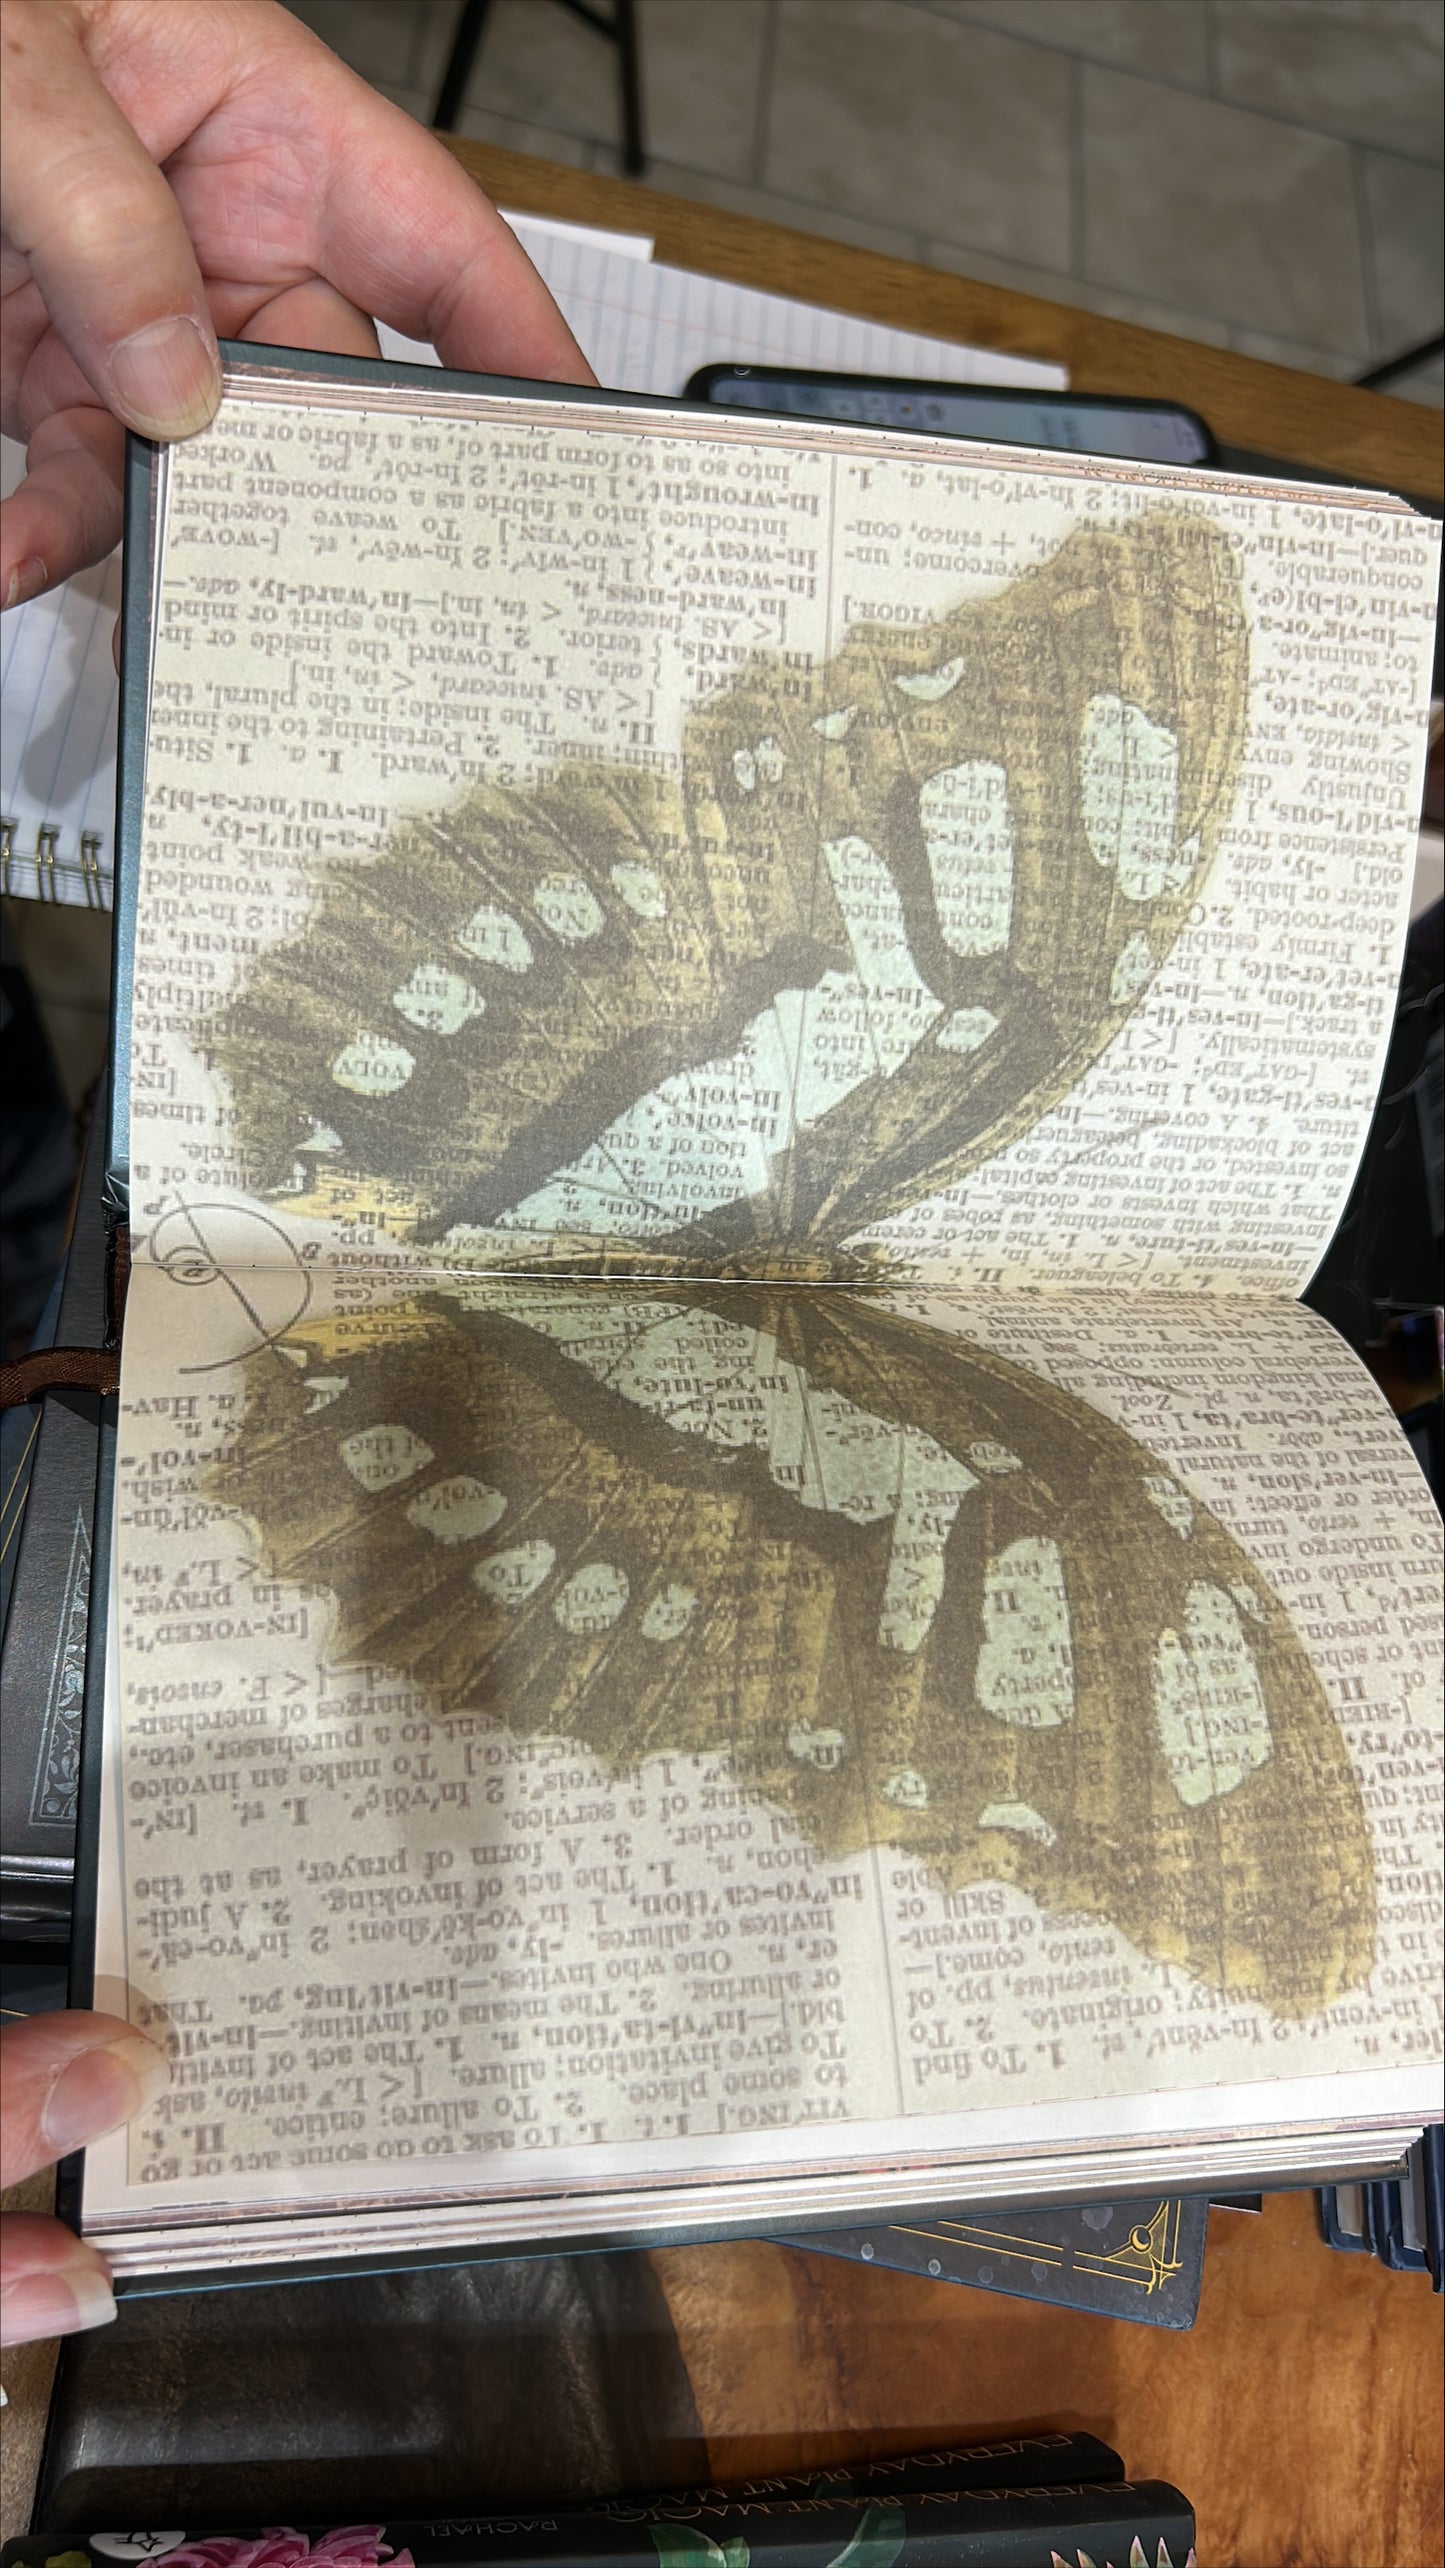 Journal "Butterfly dream"